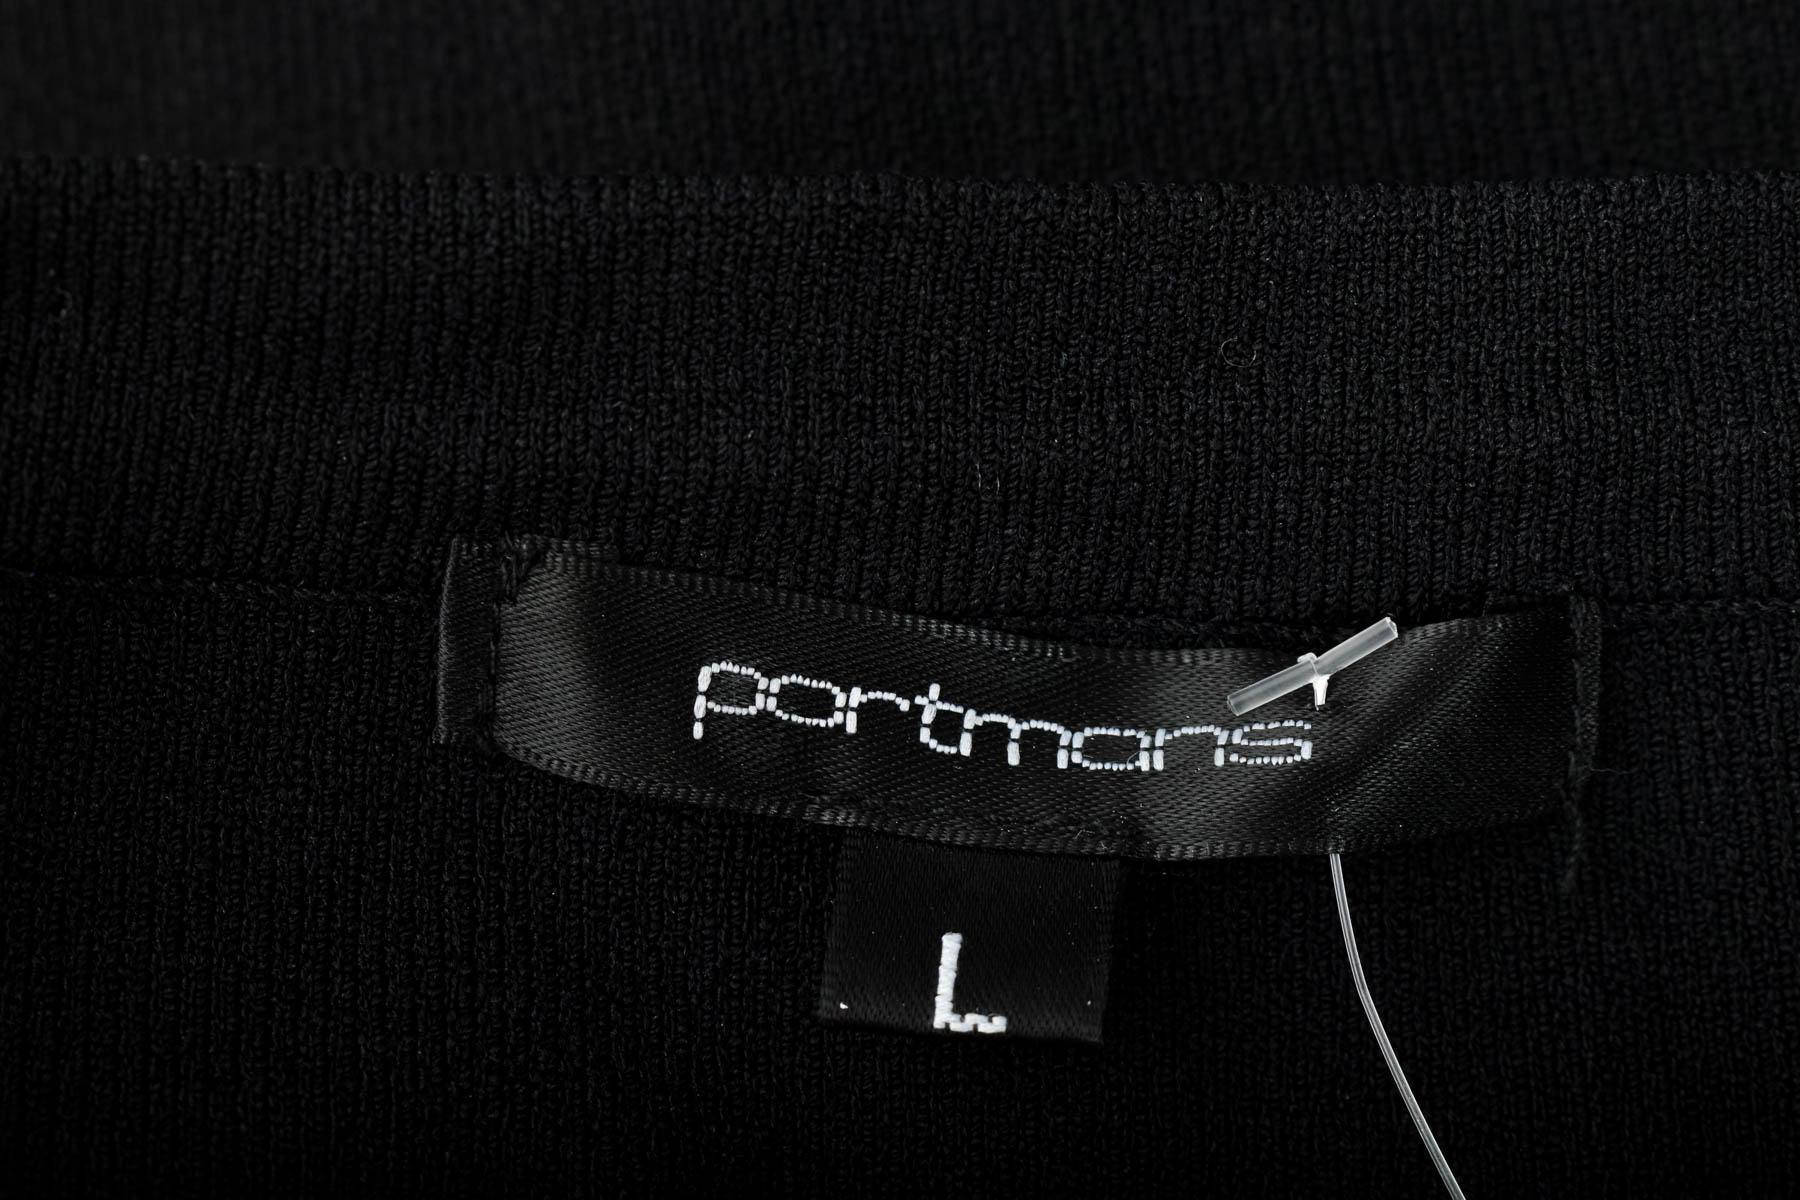 Women's sweater - Portmans - 2